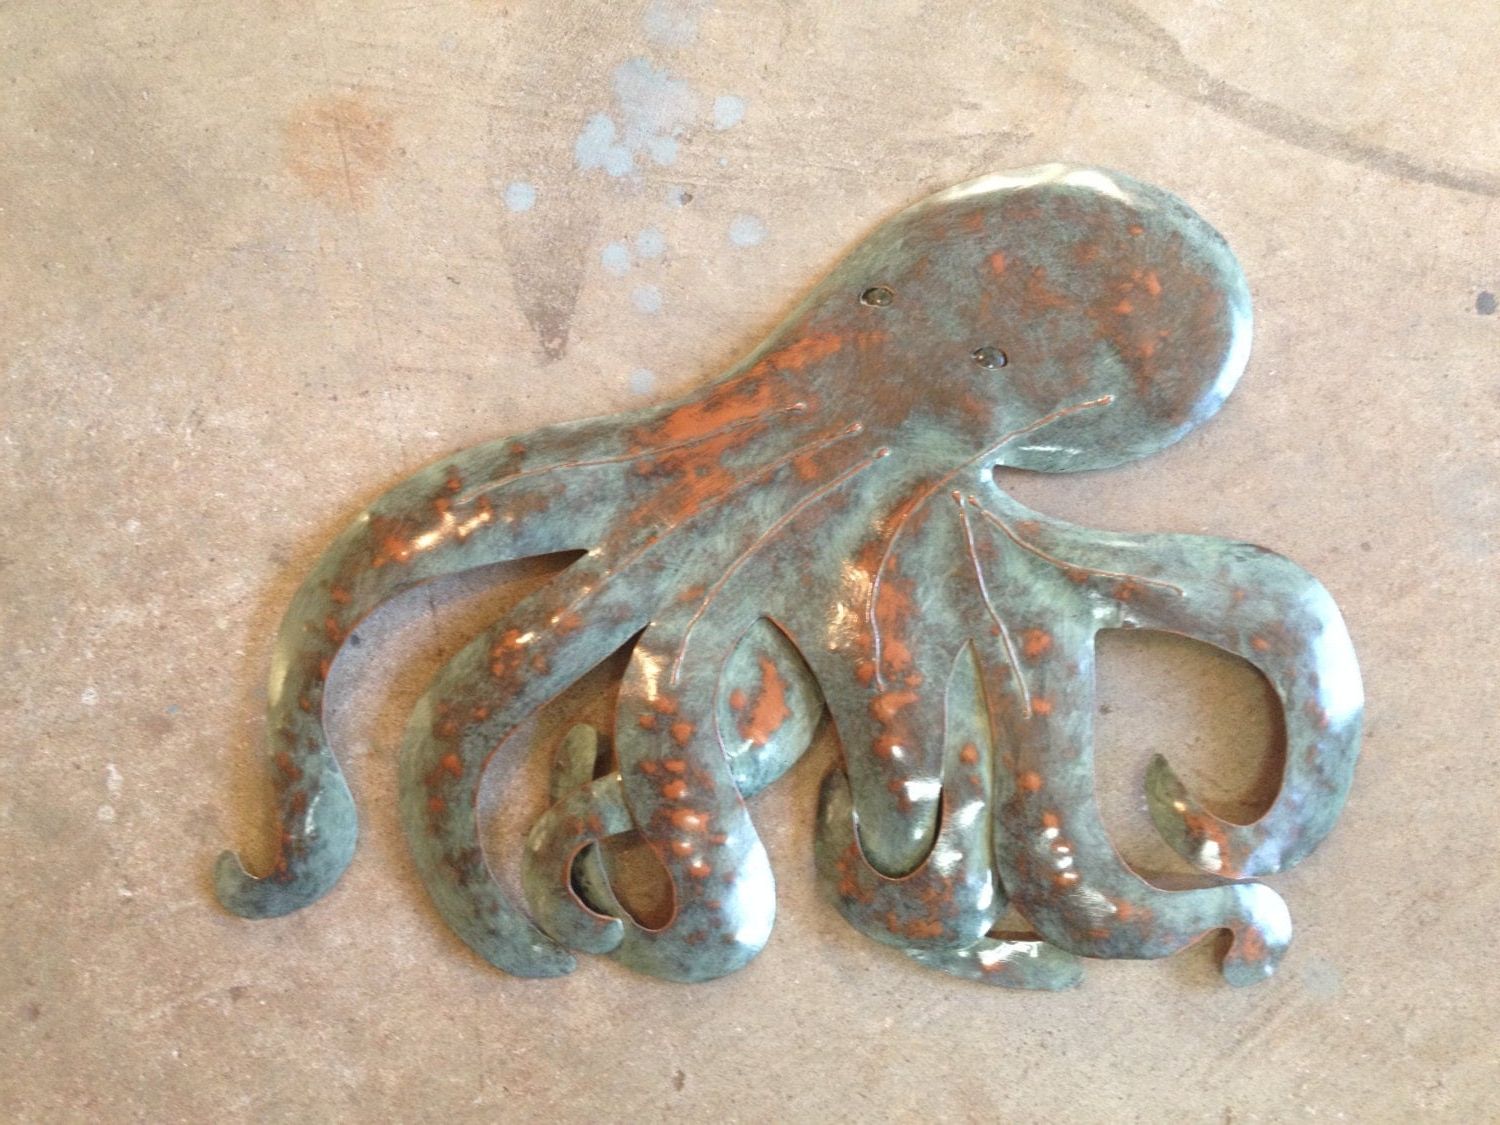 Octopus Metal Art Wall Sculpture Tropicalsallenbachfishart In Best And Newest Octopus Metal Wall Sculptures (View 8 of 15)